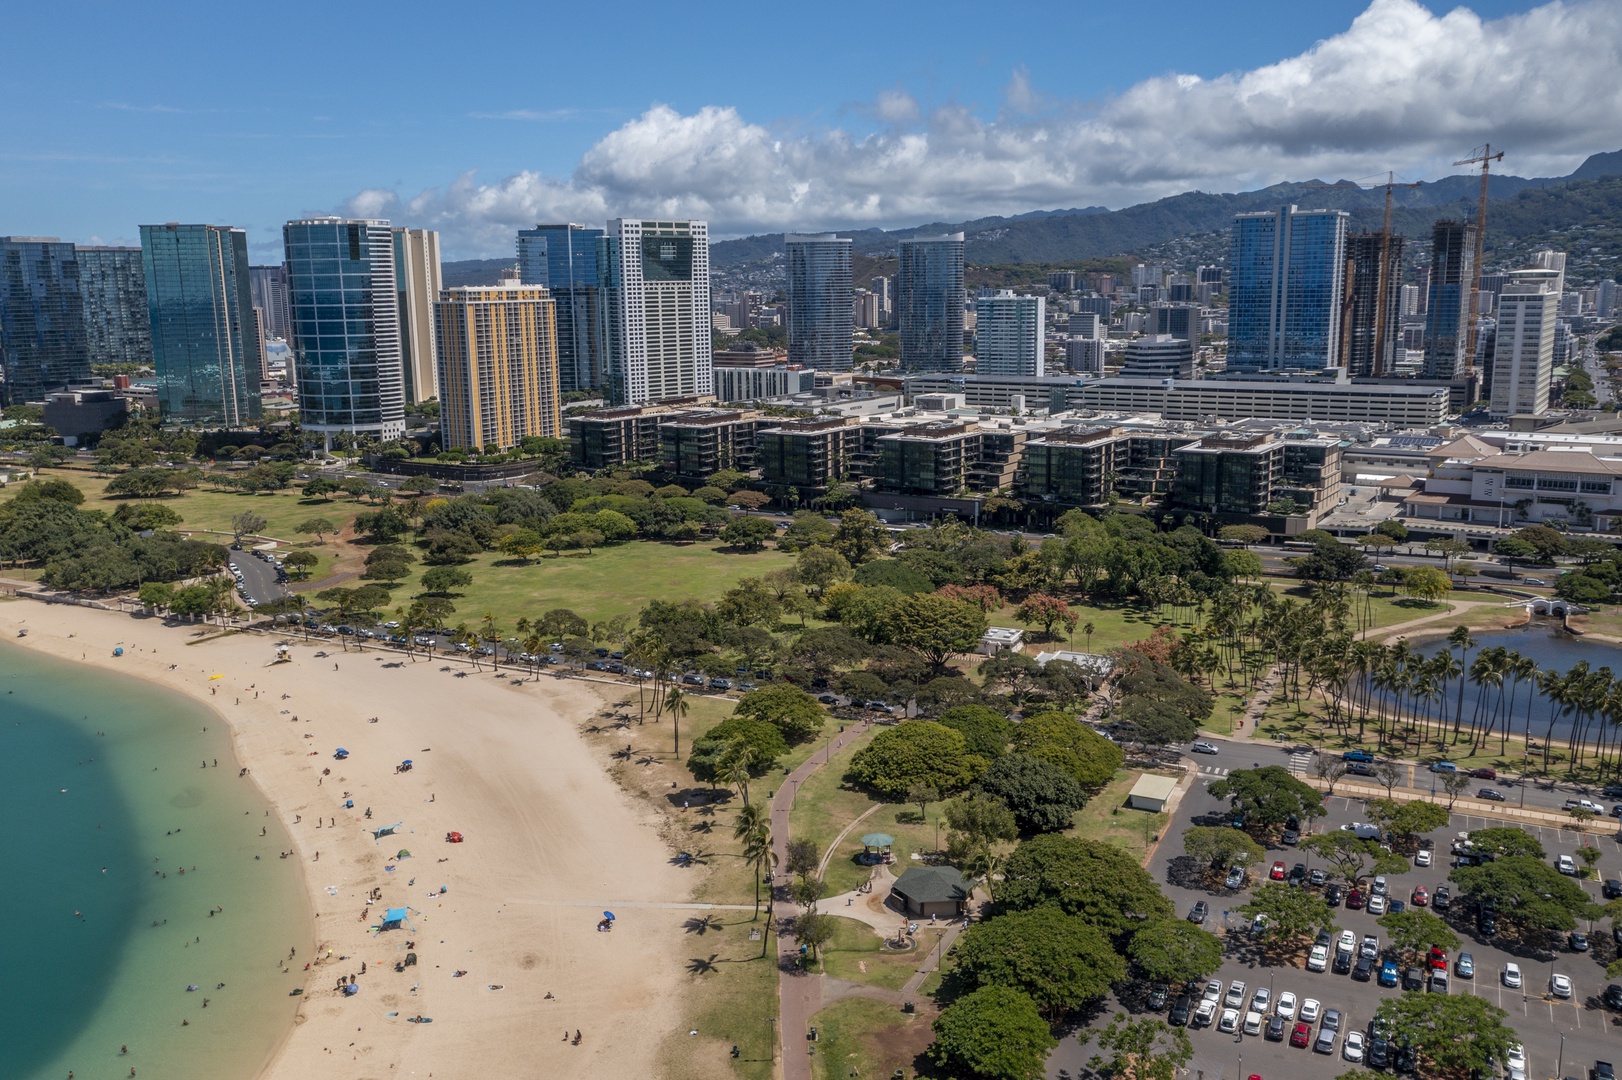 Honolulu Vacation Rentals, Park Lane Sky Resort - The Ala Moana Beach Park is just a few minutes away